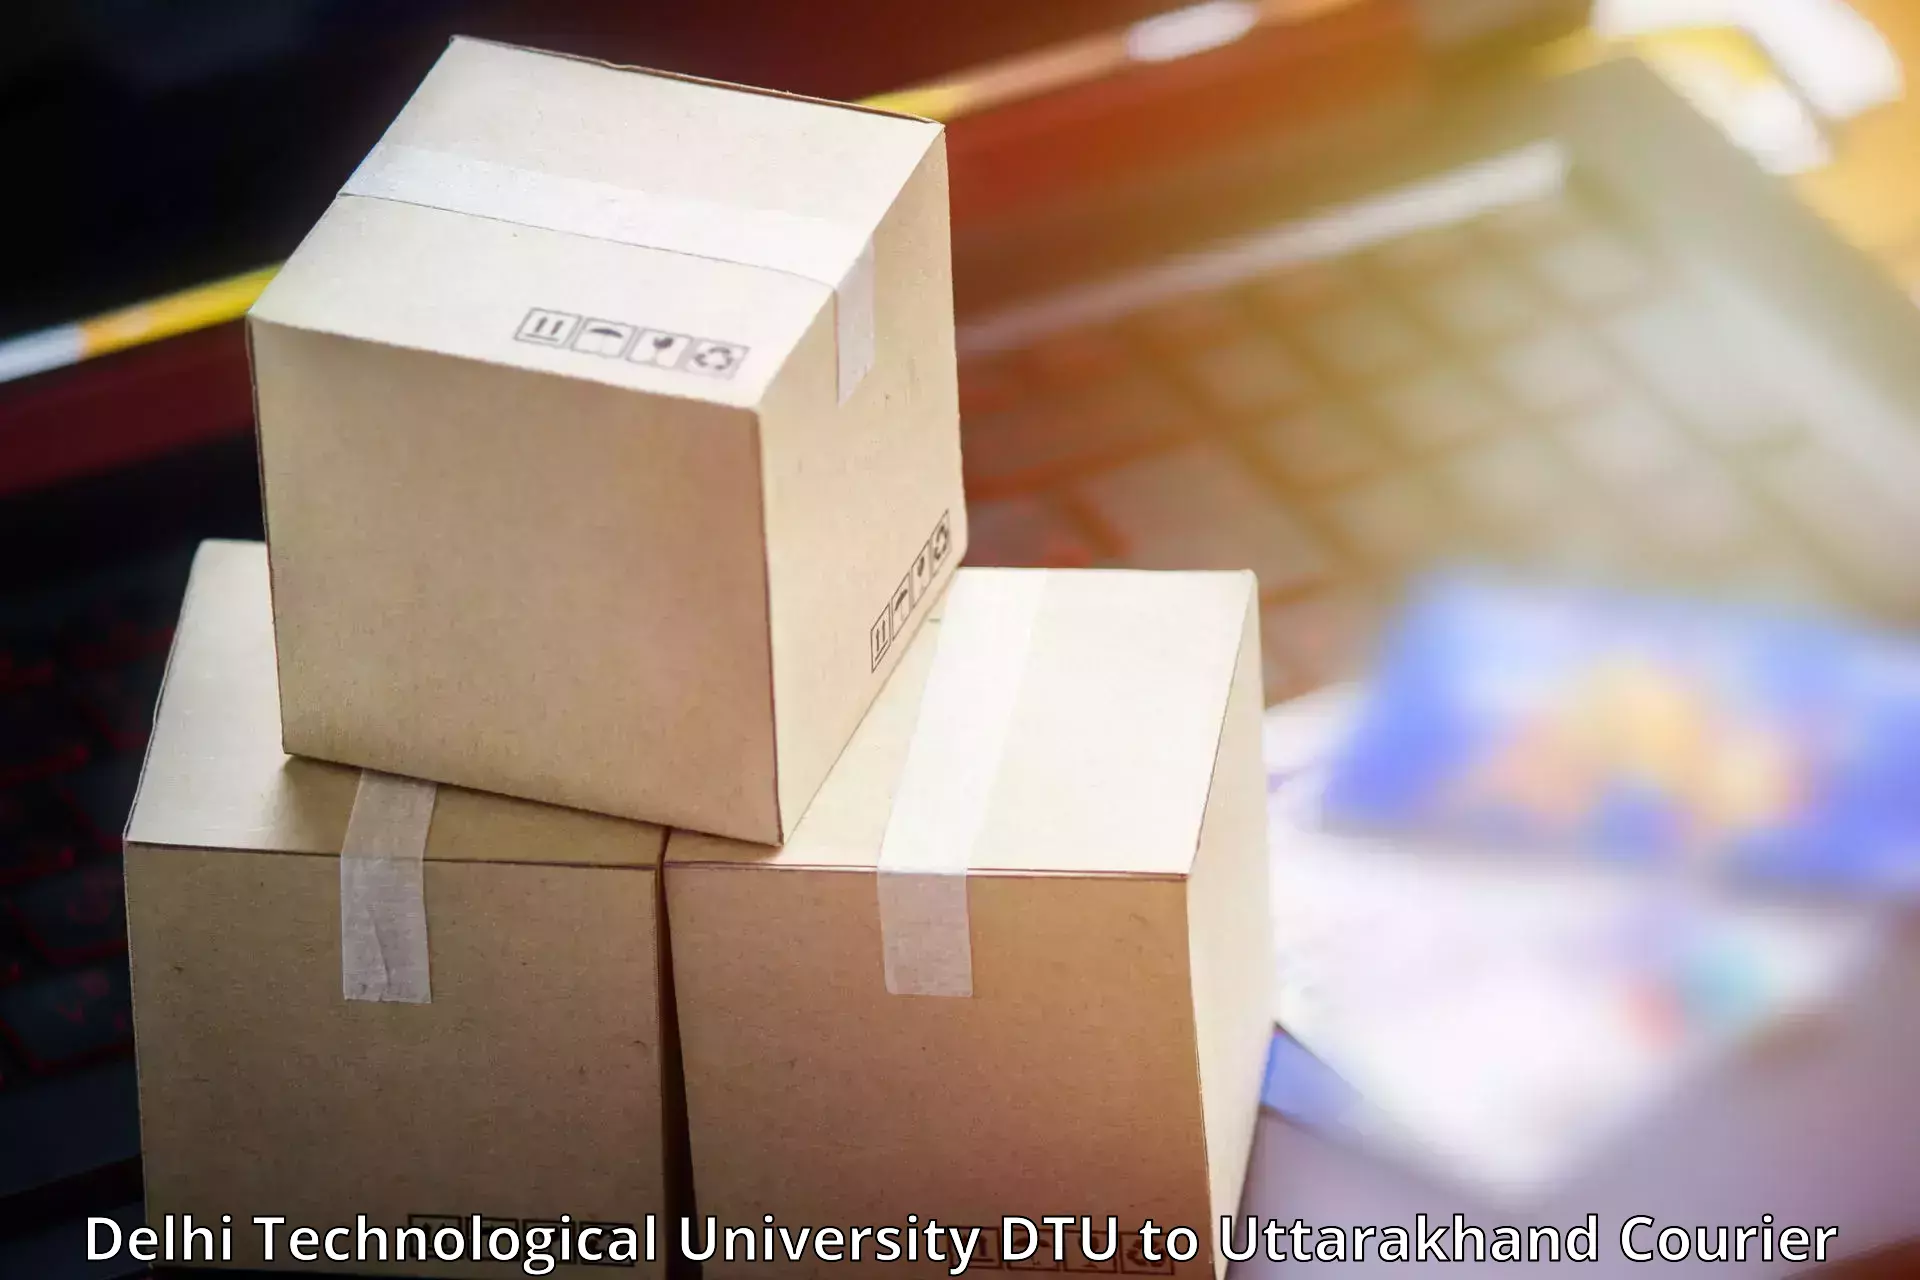 Affordable parcel service Delhi Technological University DTU to Rishikesh